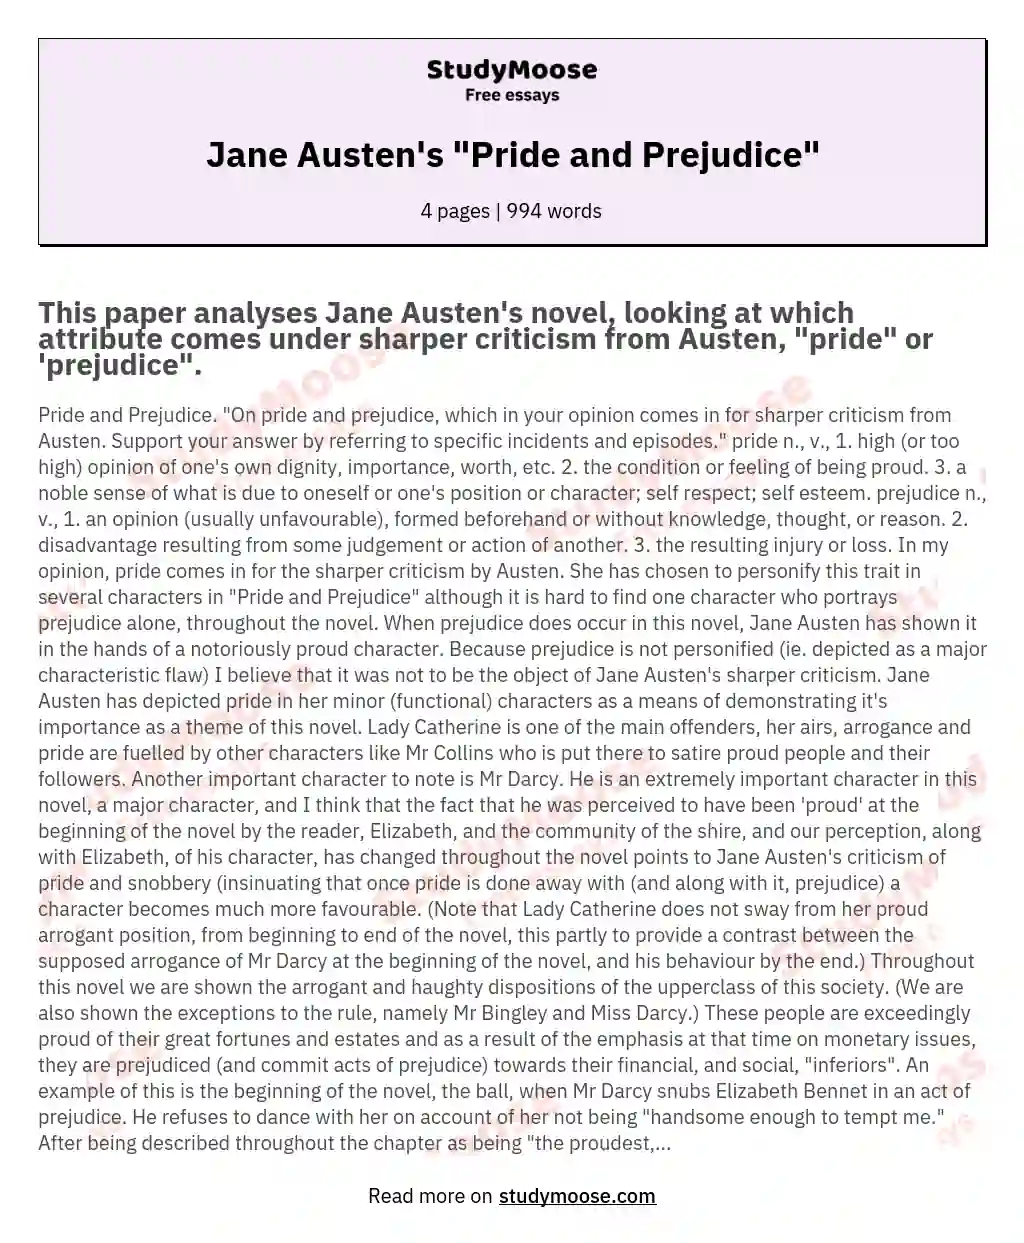 Jane Austen's "Pride and Prejudice" essay